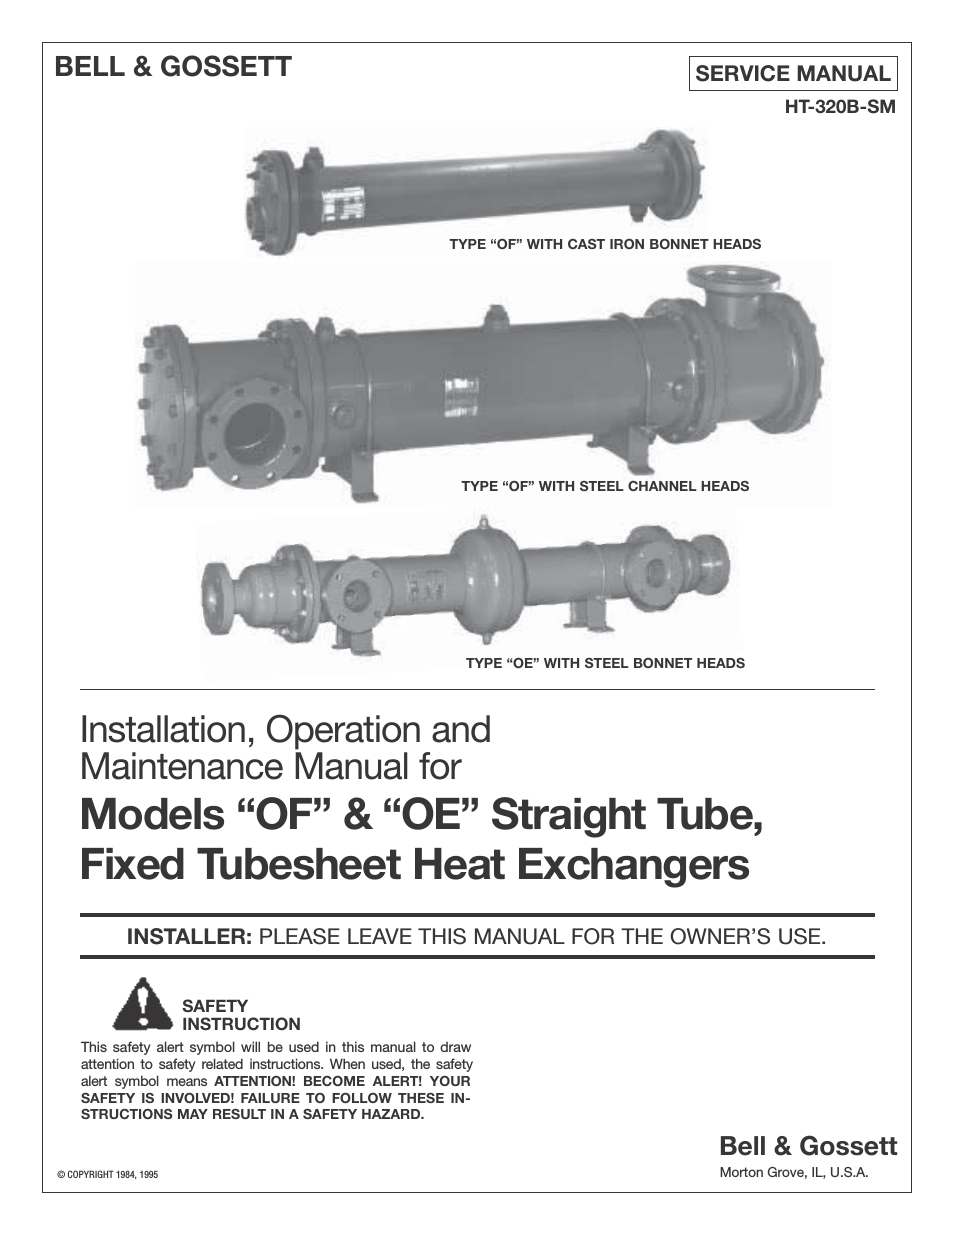 HT 320B SM Models “OE” Straight Tube, Fixed Tubesheet Heat Exchangers